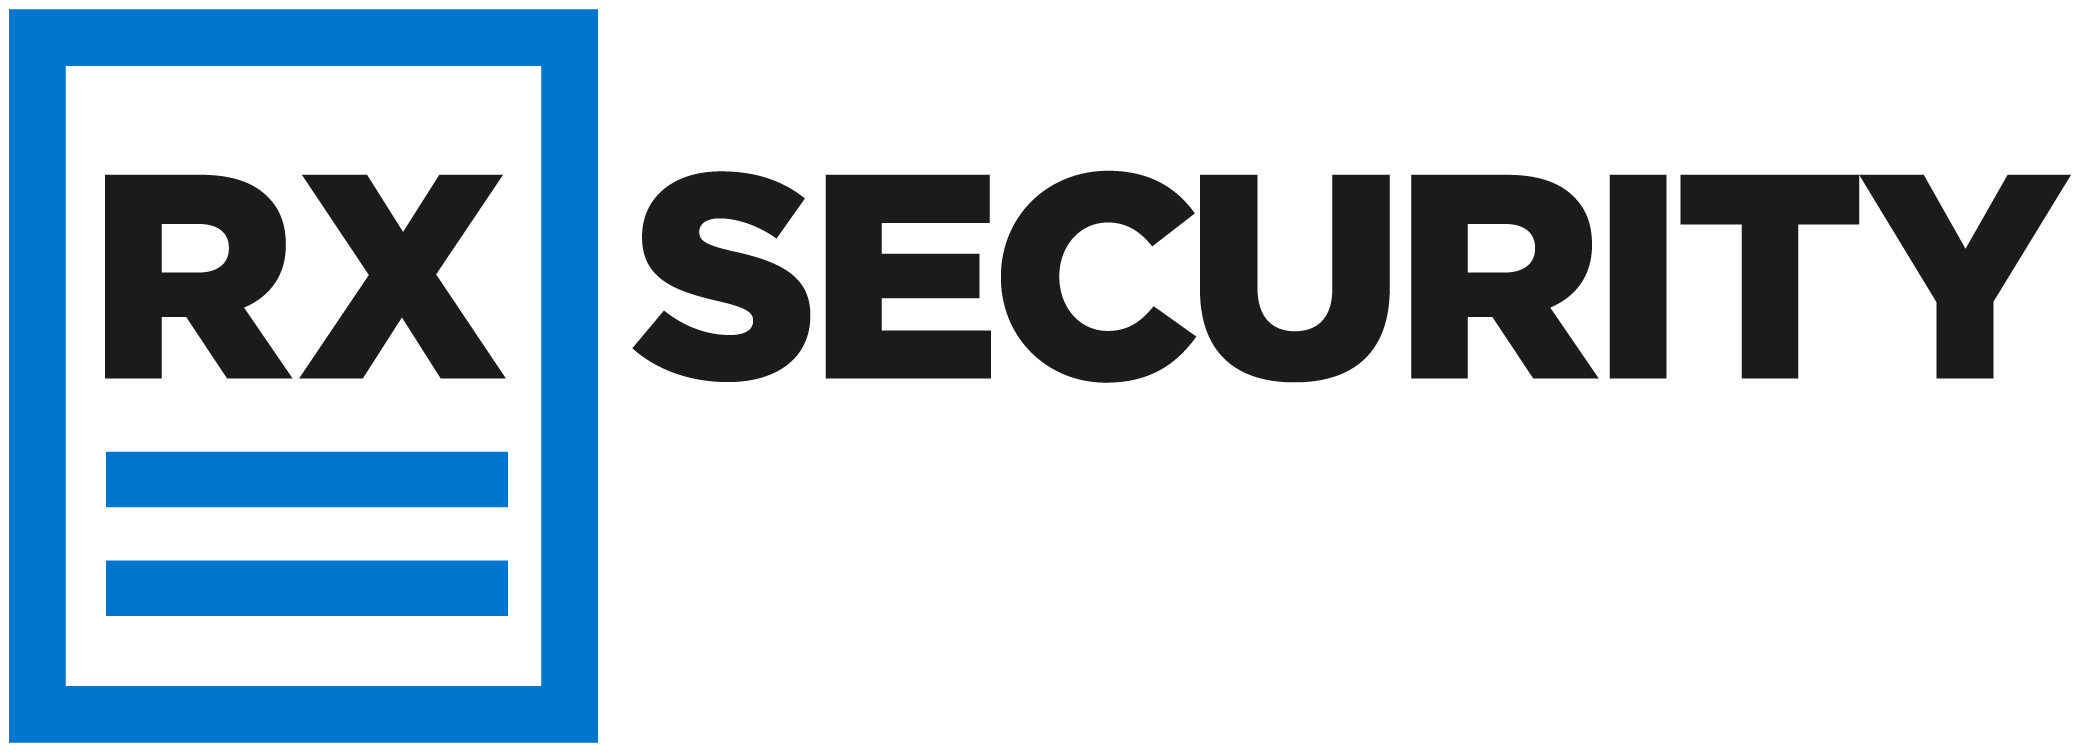 Rx_Security_Banner_Logo.jpg